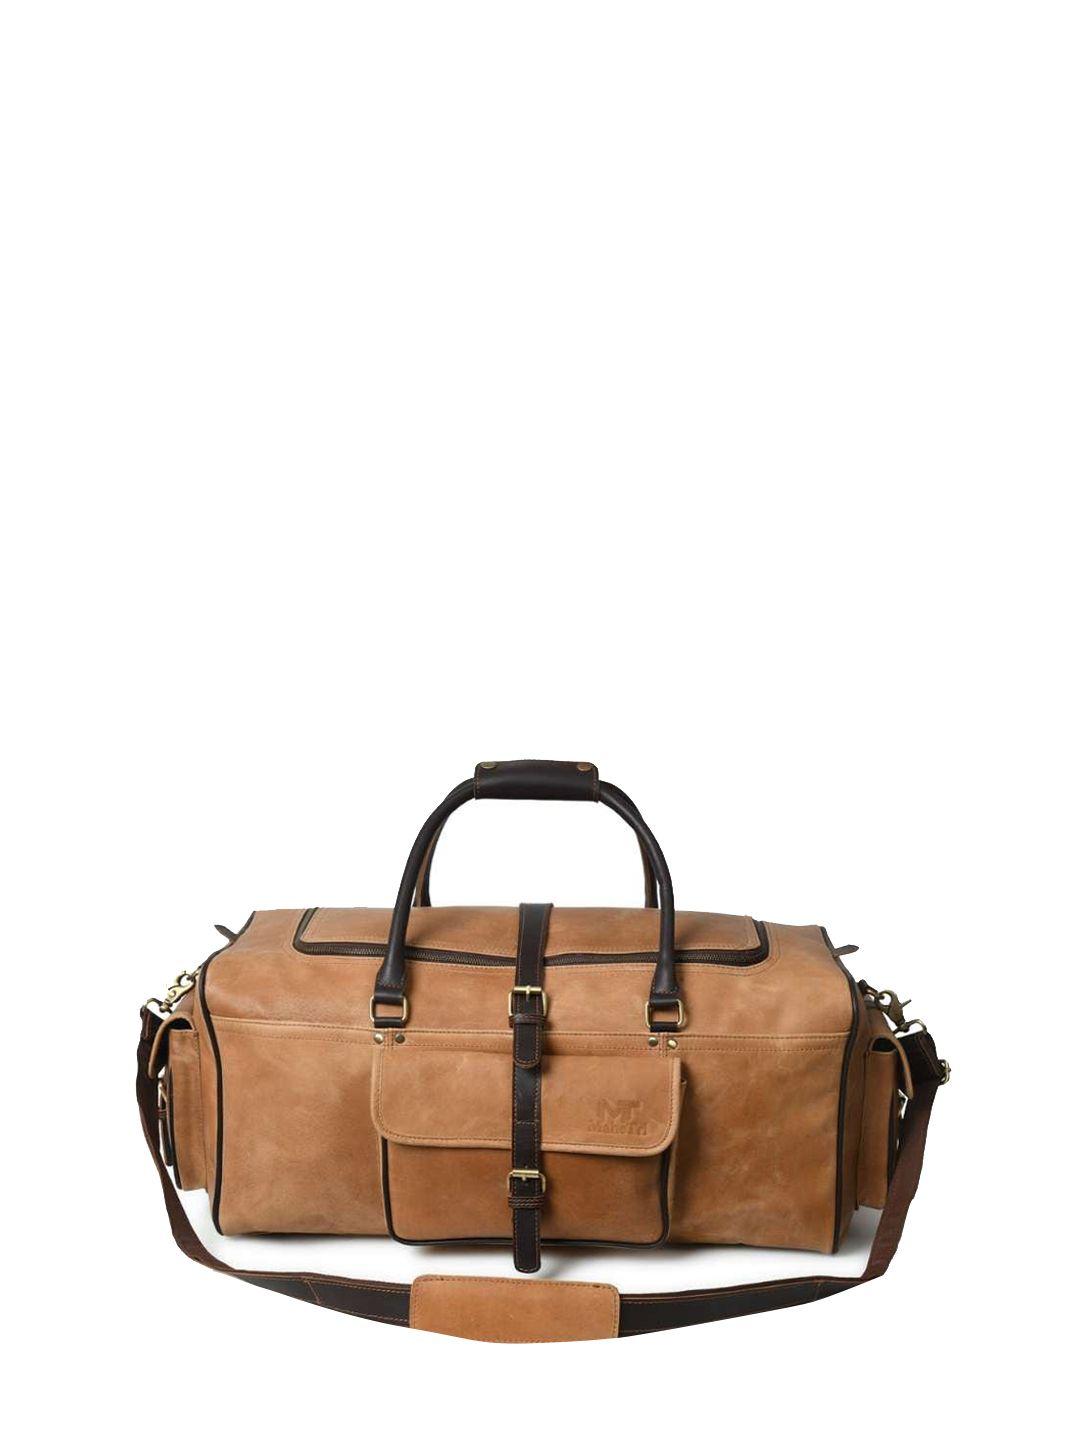 mahetri leather large casual duffel bag- 24 inch